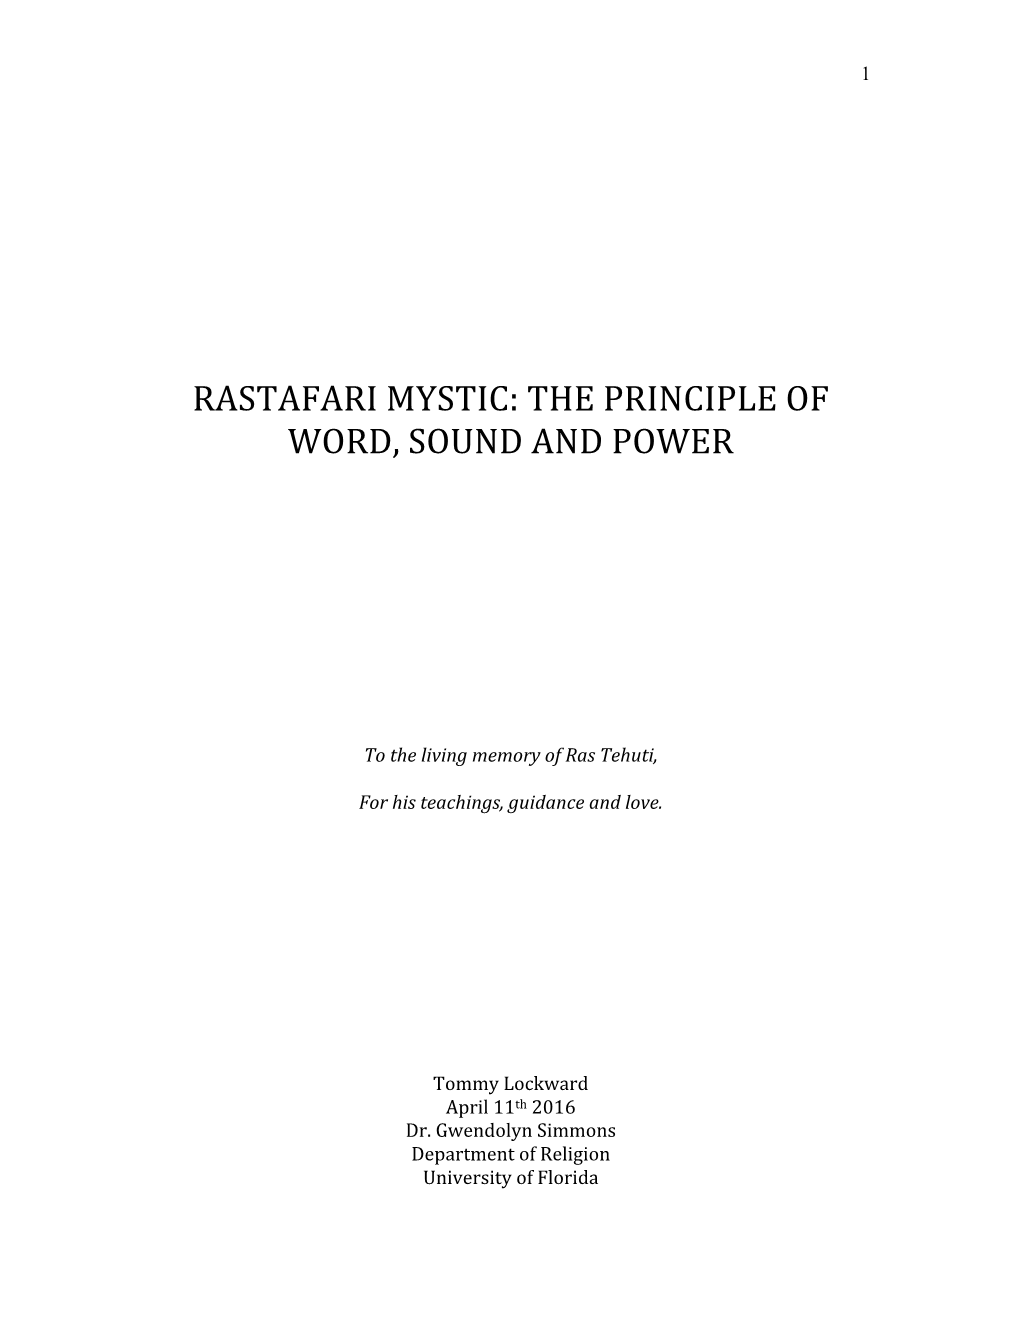 Rastafari Mystic: the Principle of Word, Sound and Power